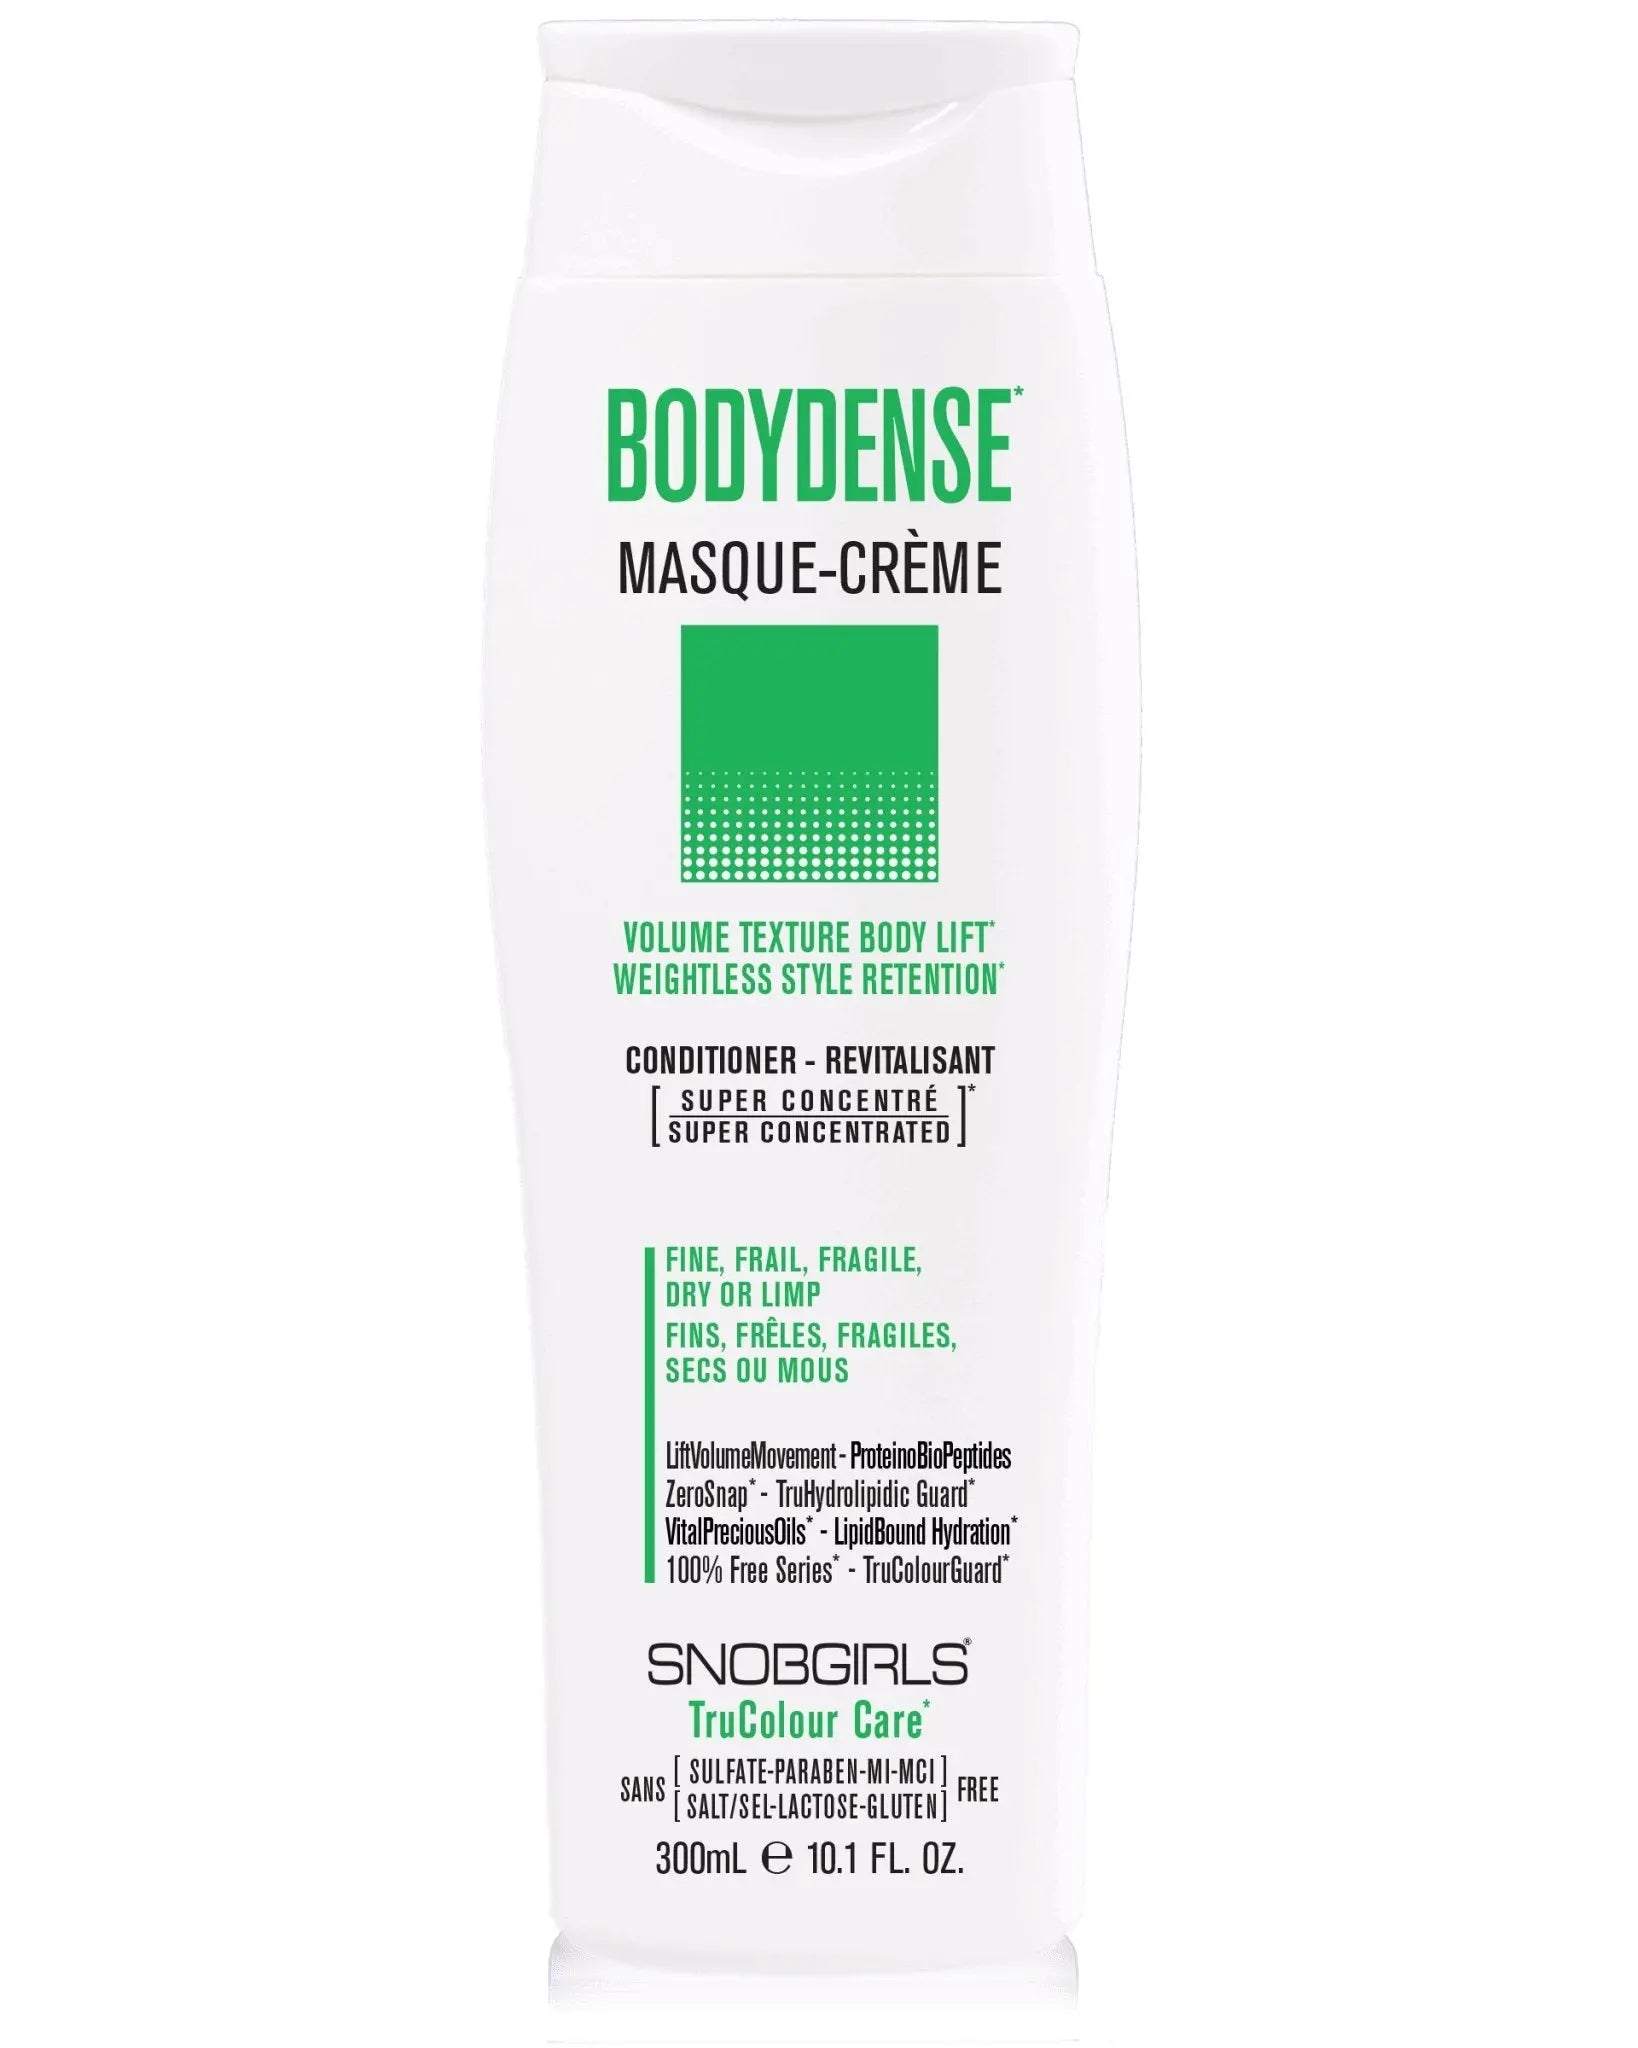 BODYDENSE Masque-Creme (conditioner) 10.1 FL. OZ. - SNOBGIRLS.com